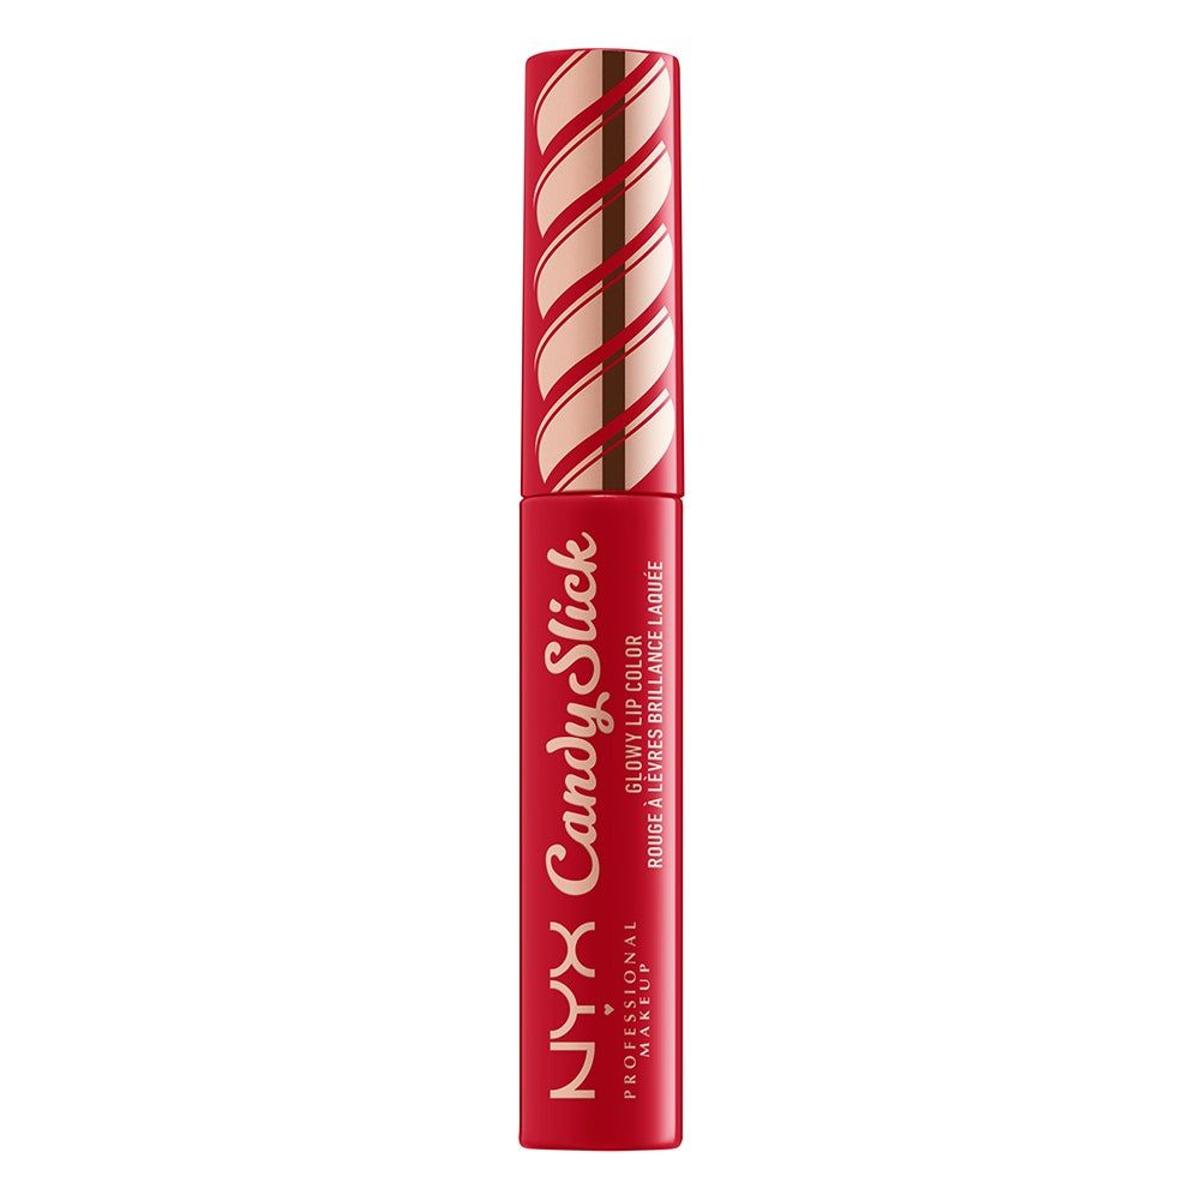 Gloss Candy Slick Glowy Lip Color de NYX (Precio: 6,50 euros)